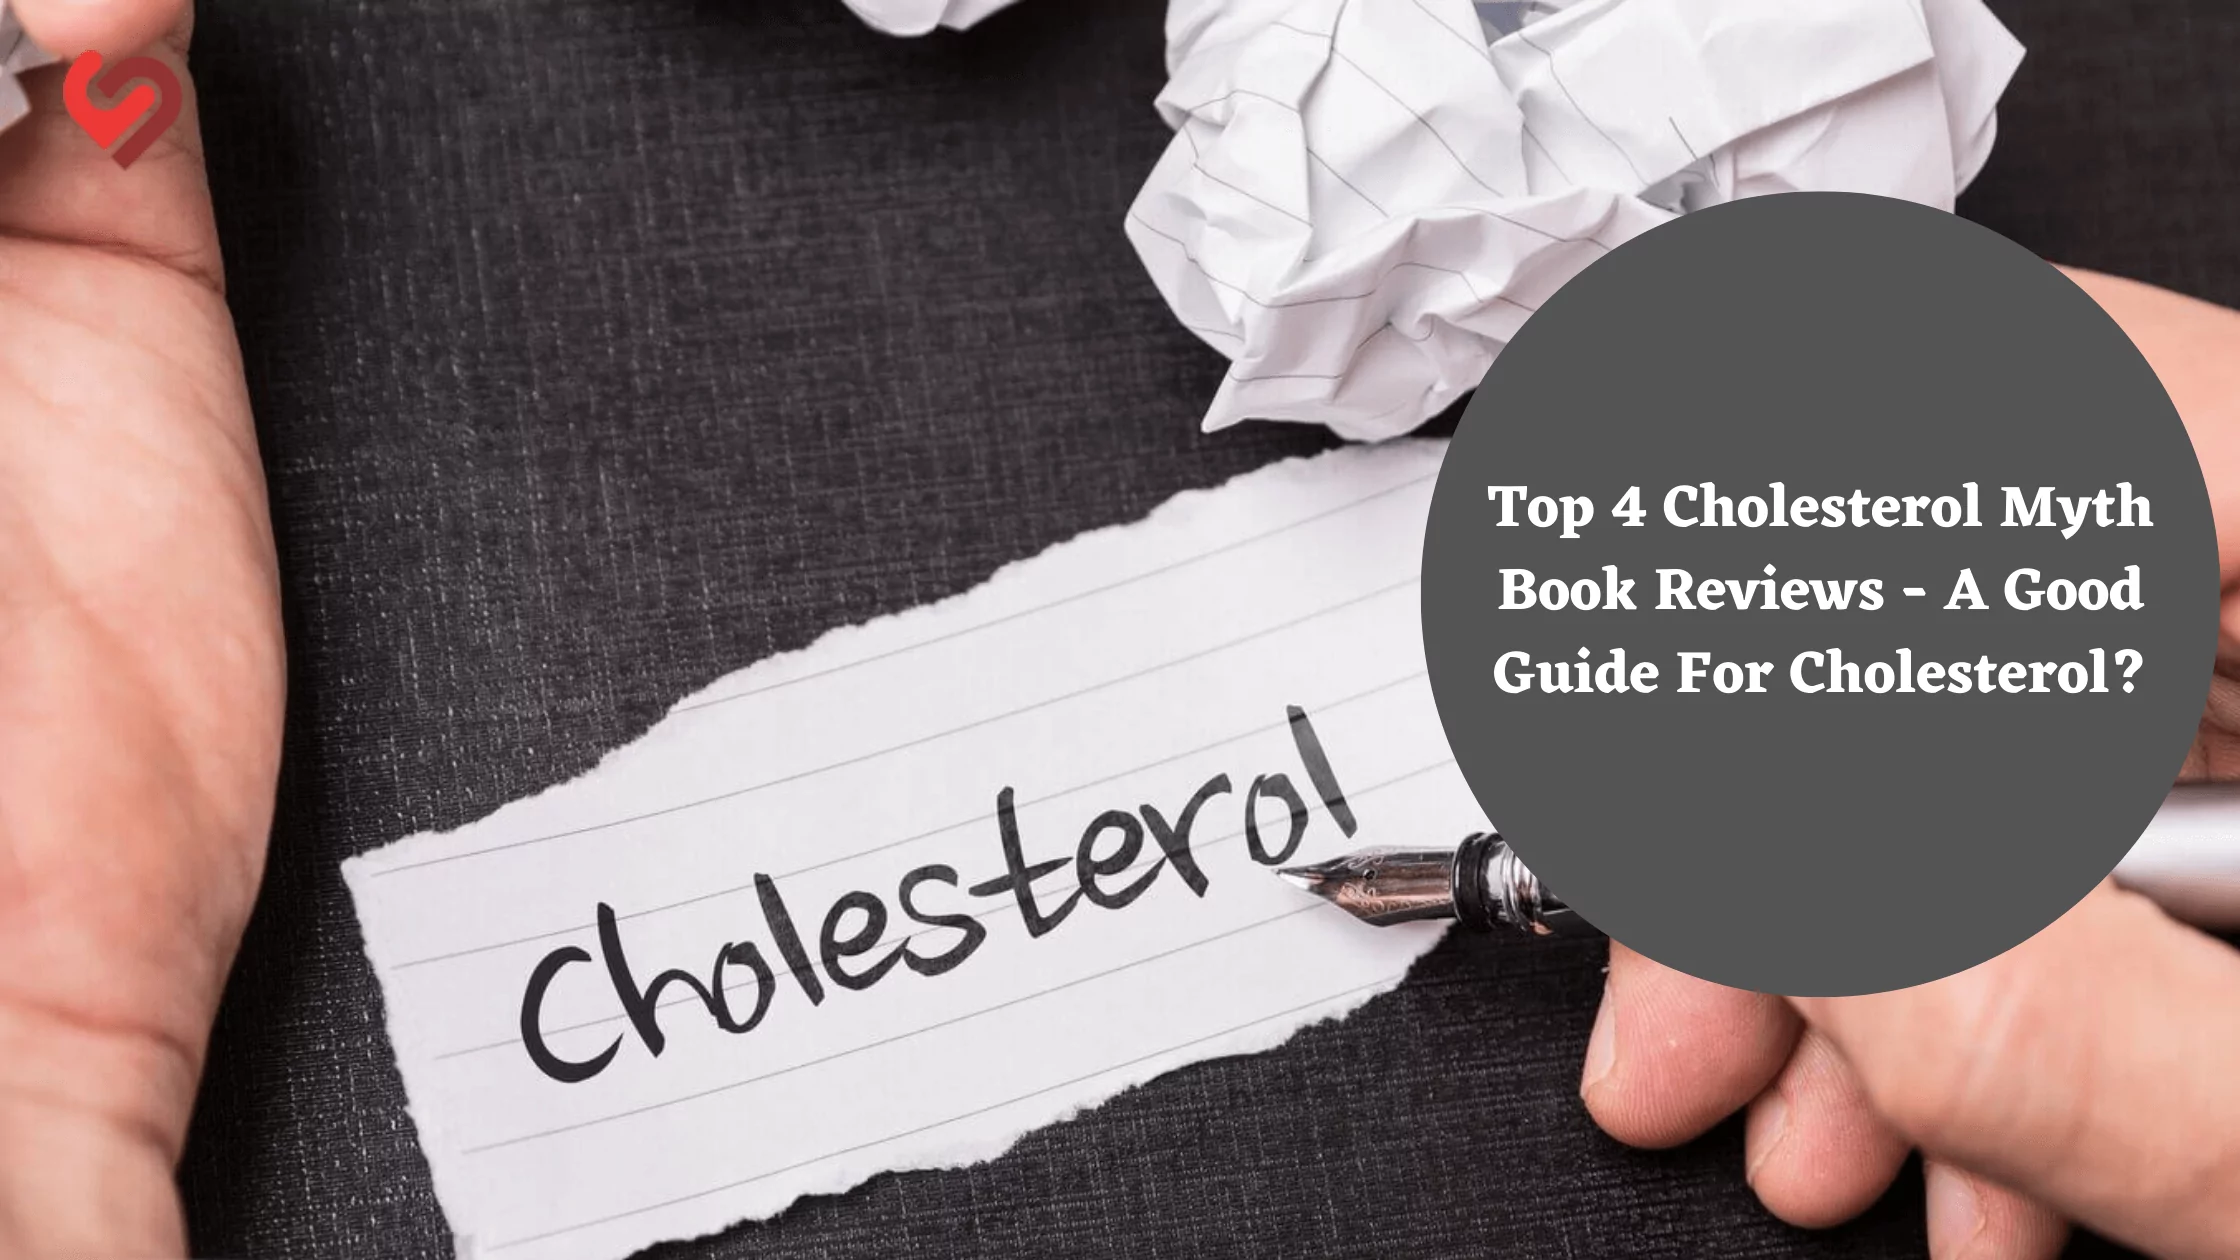 Top 4 Cholesterol Myth Book Reviews